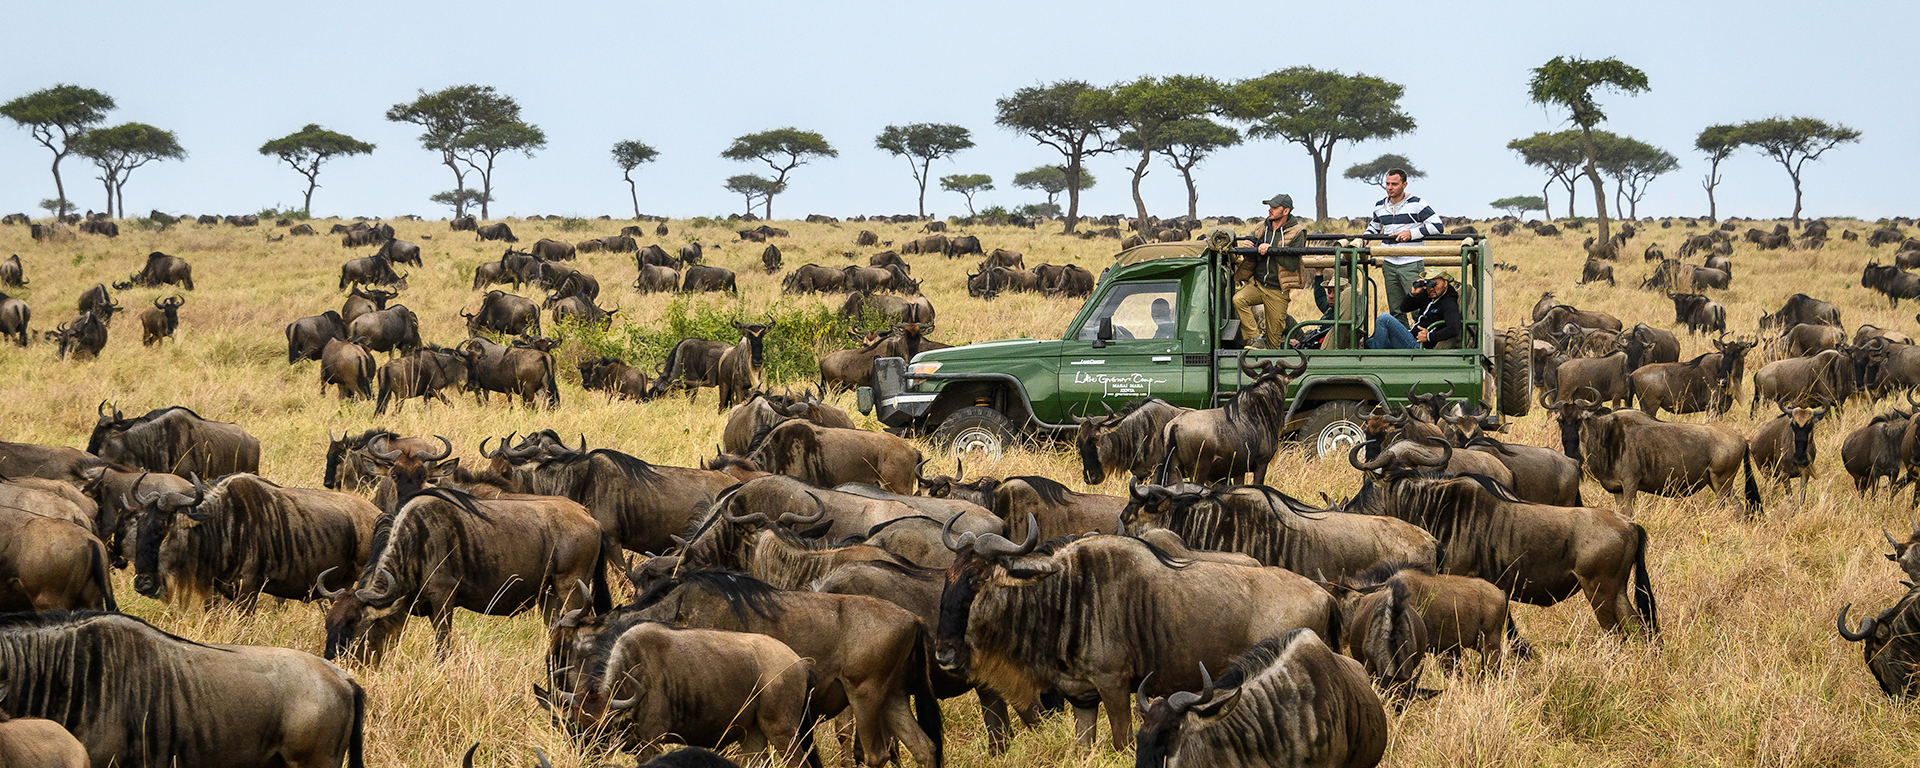 The Serengeti Wildebeest Migration in Tanzania